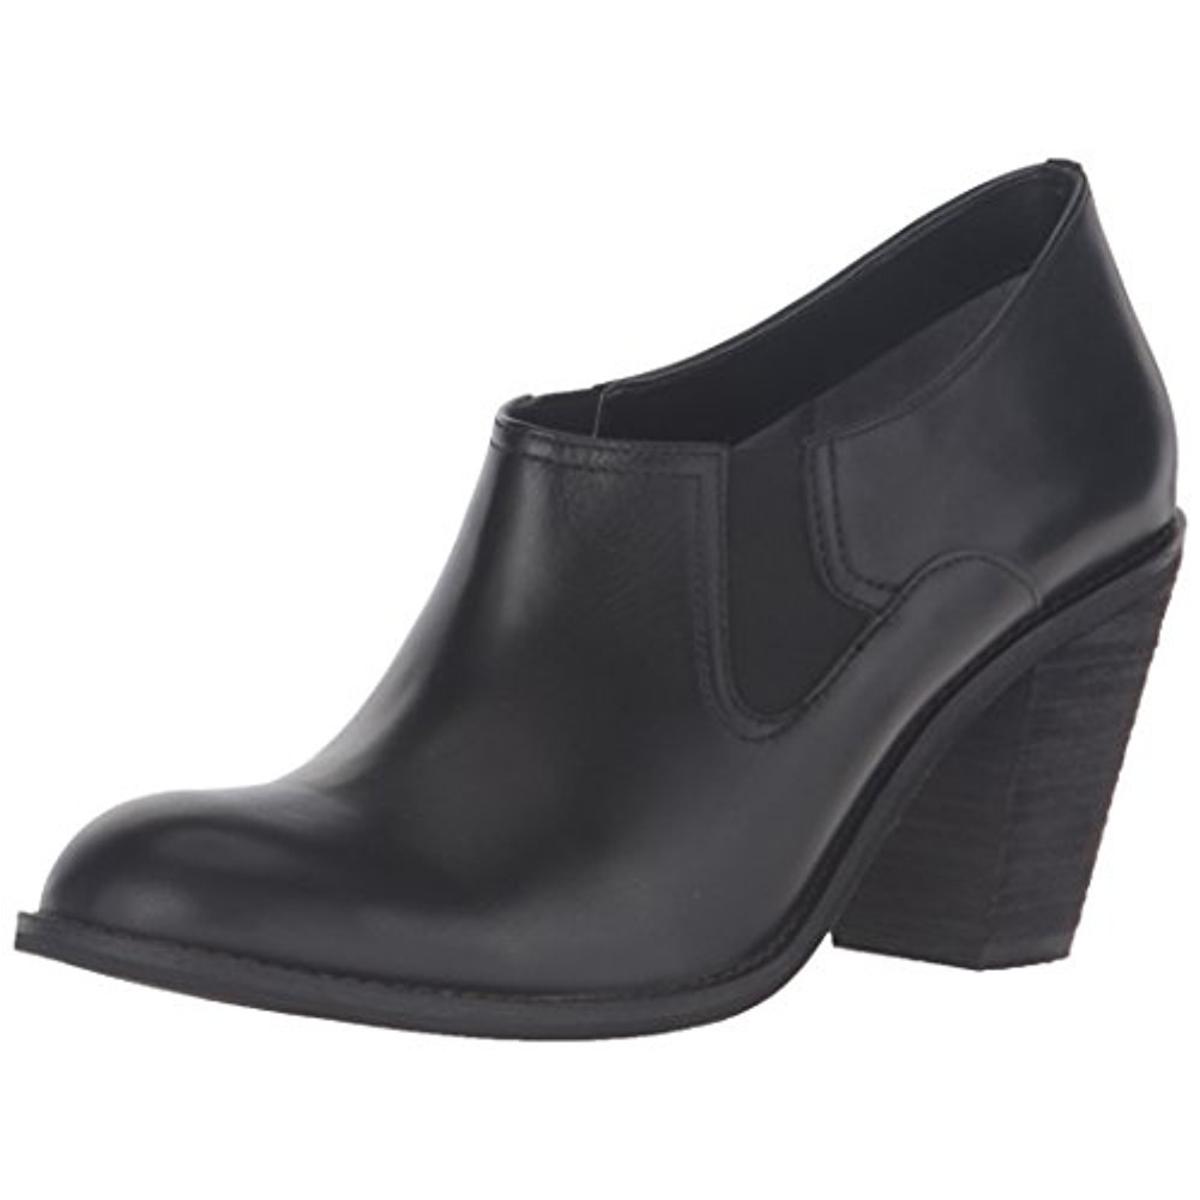 SoftWalk 6173 Womens Fargo Leather Heels Ankle Shooties Shoes BHFO | eBay